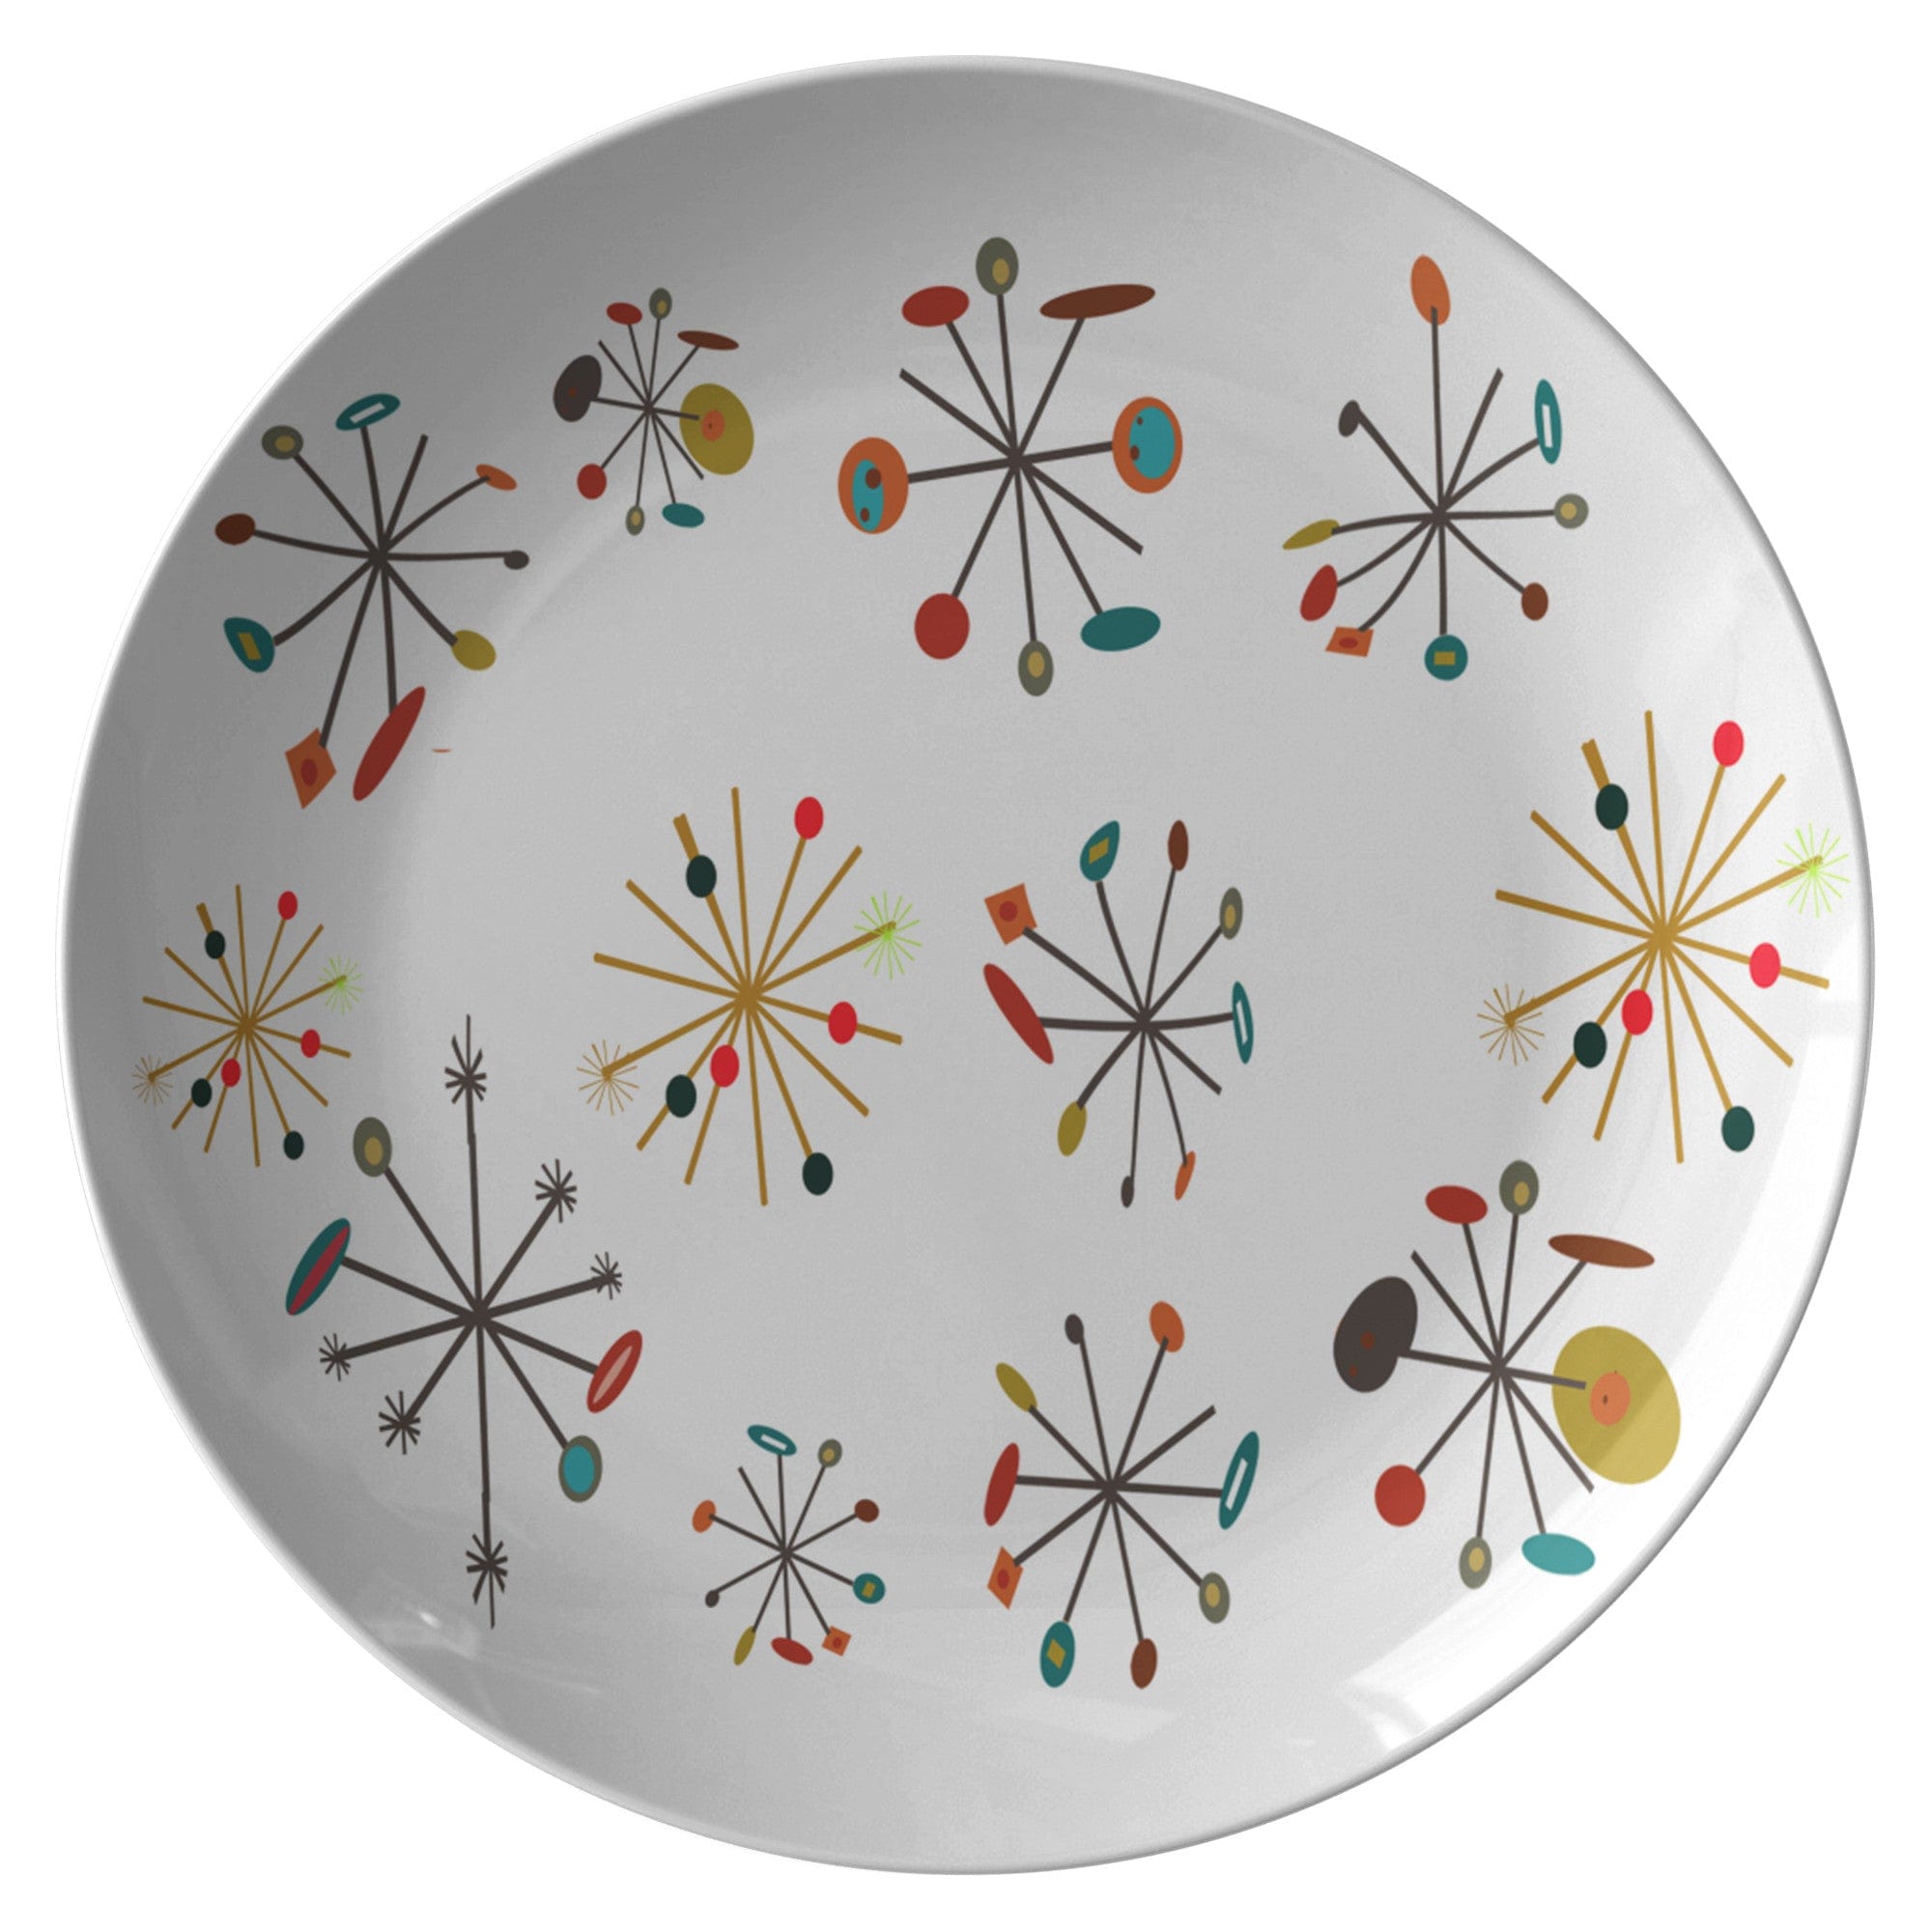 Kate McEnroe New York Mid Century Modern Atomic Starburst Dinner Plate, 1950s Inspired Design, Retro Vintage Dinnerware, Collectible Home Decor Plates